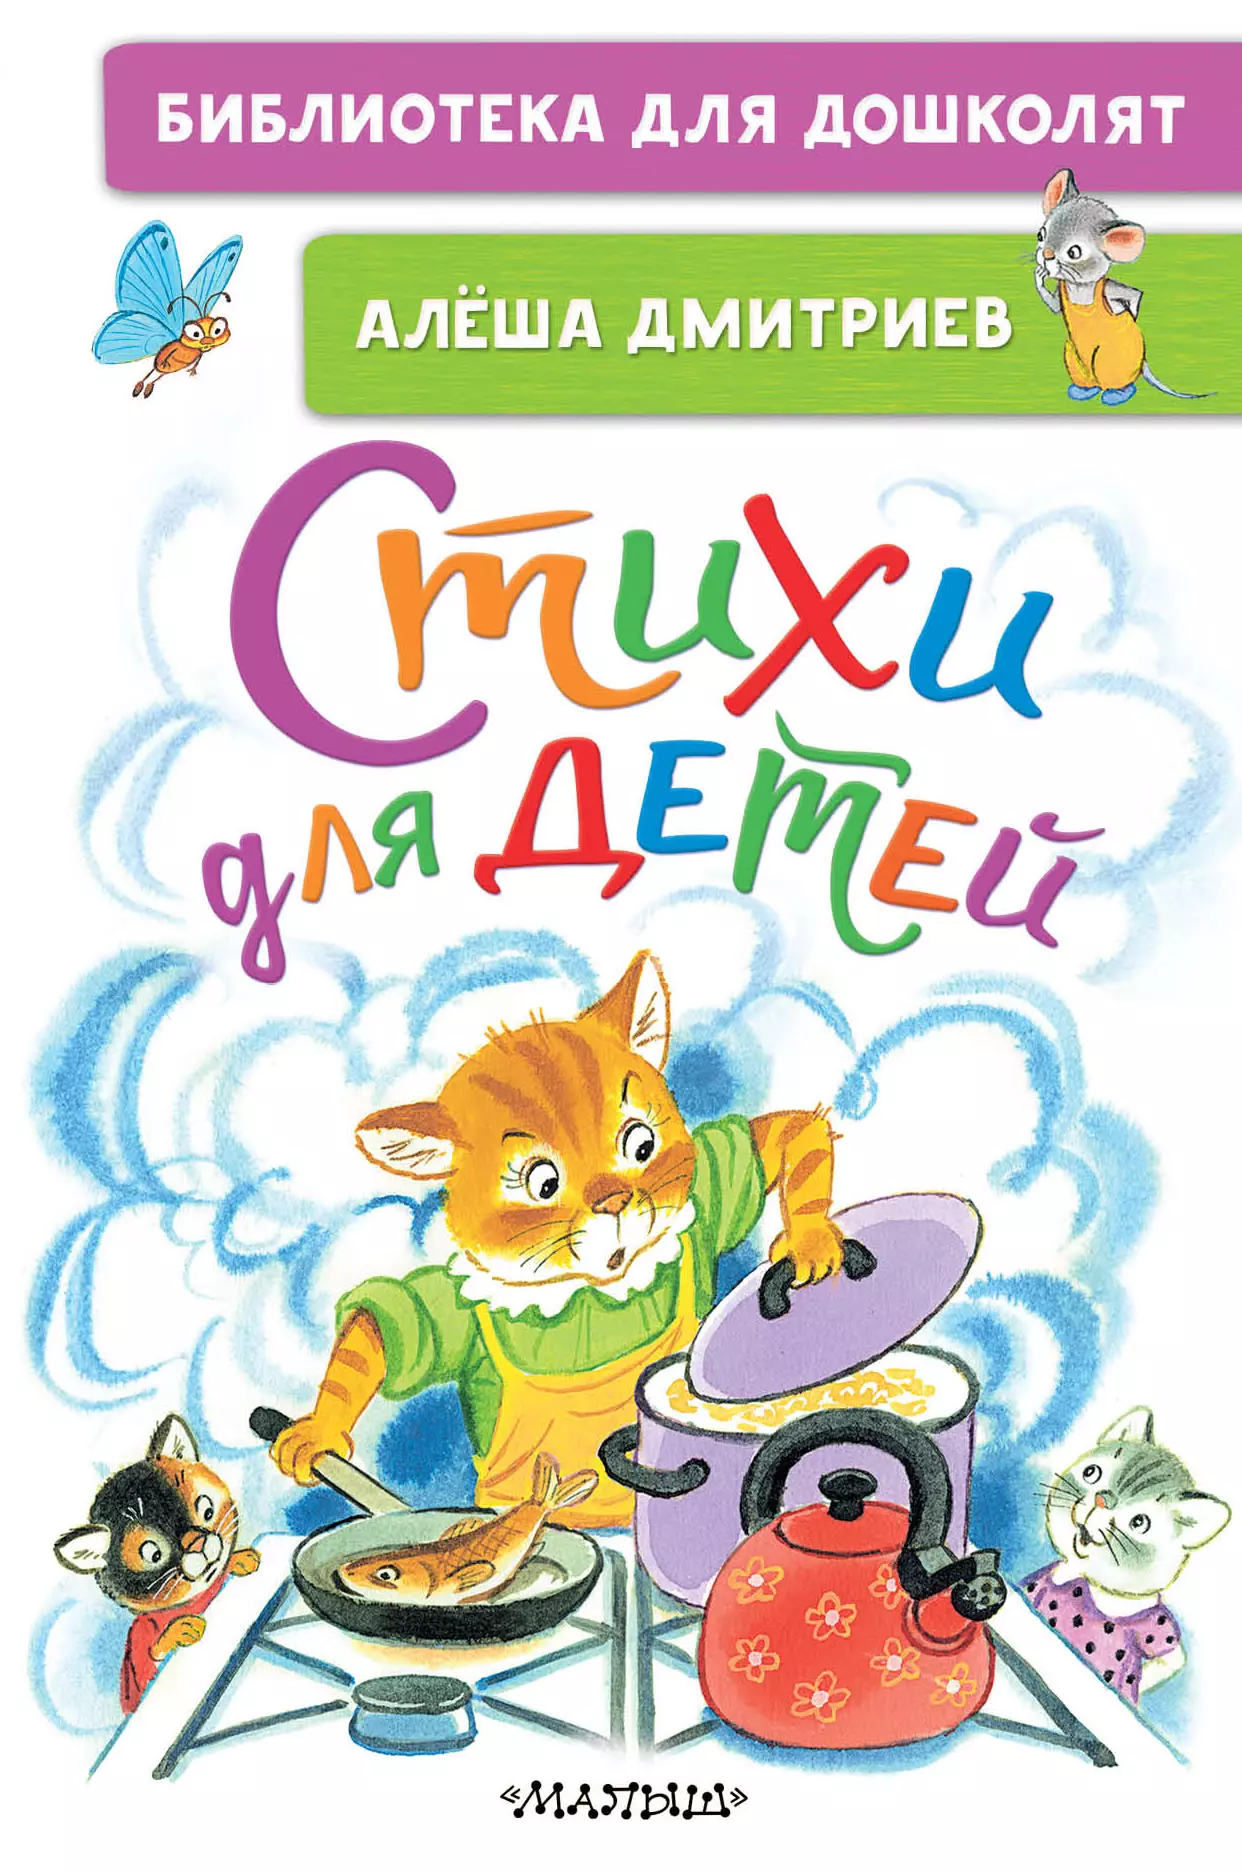 Дмитриев Алеша - Стихи для детей